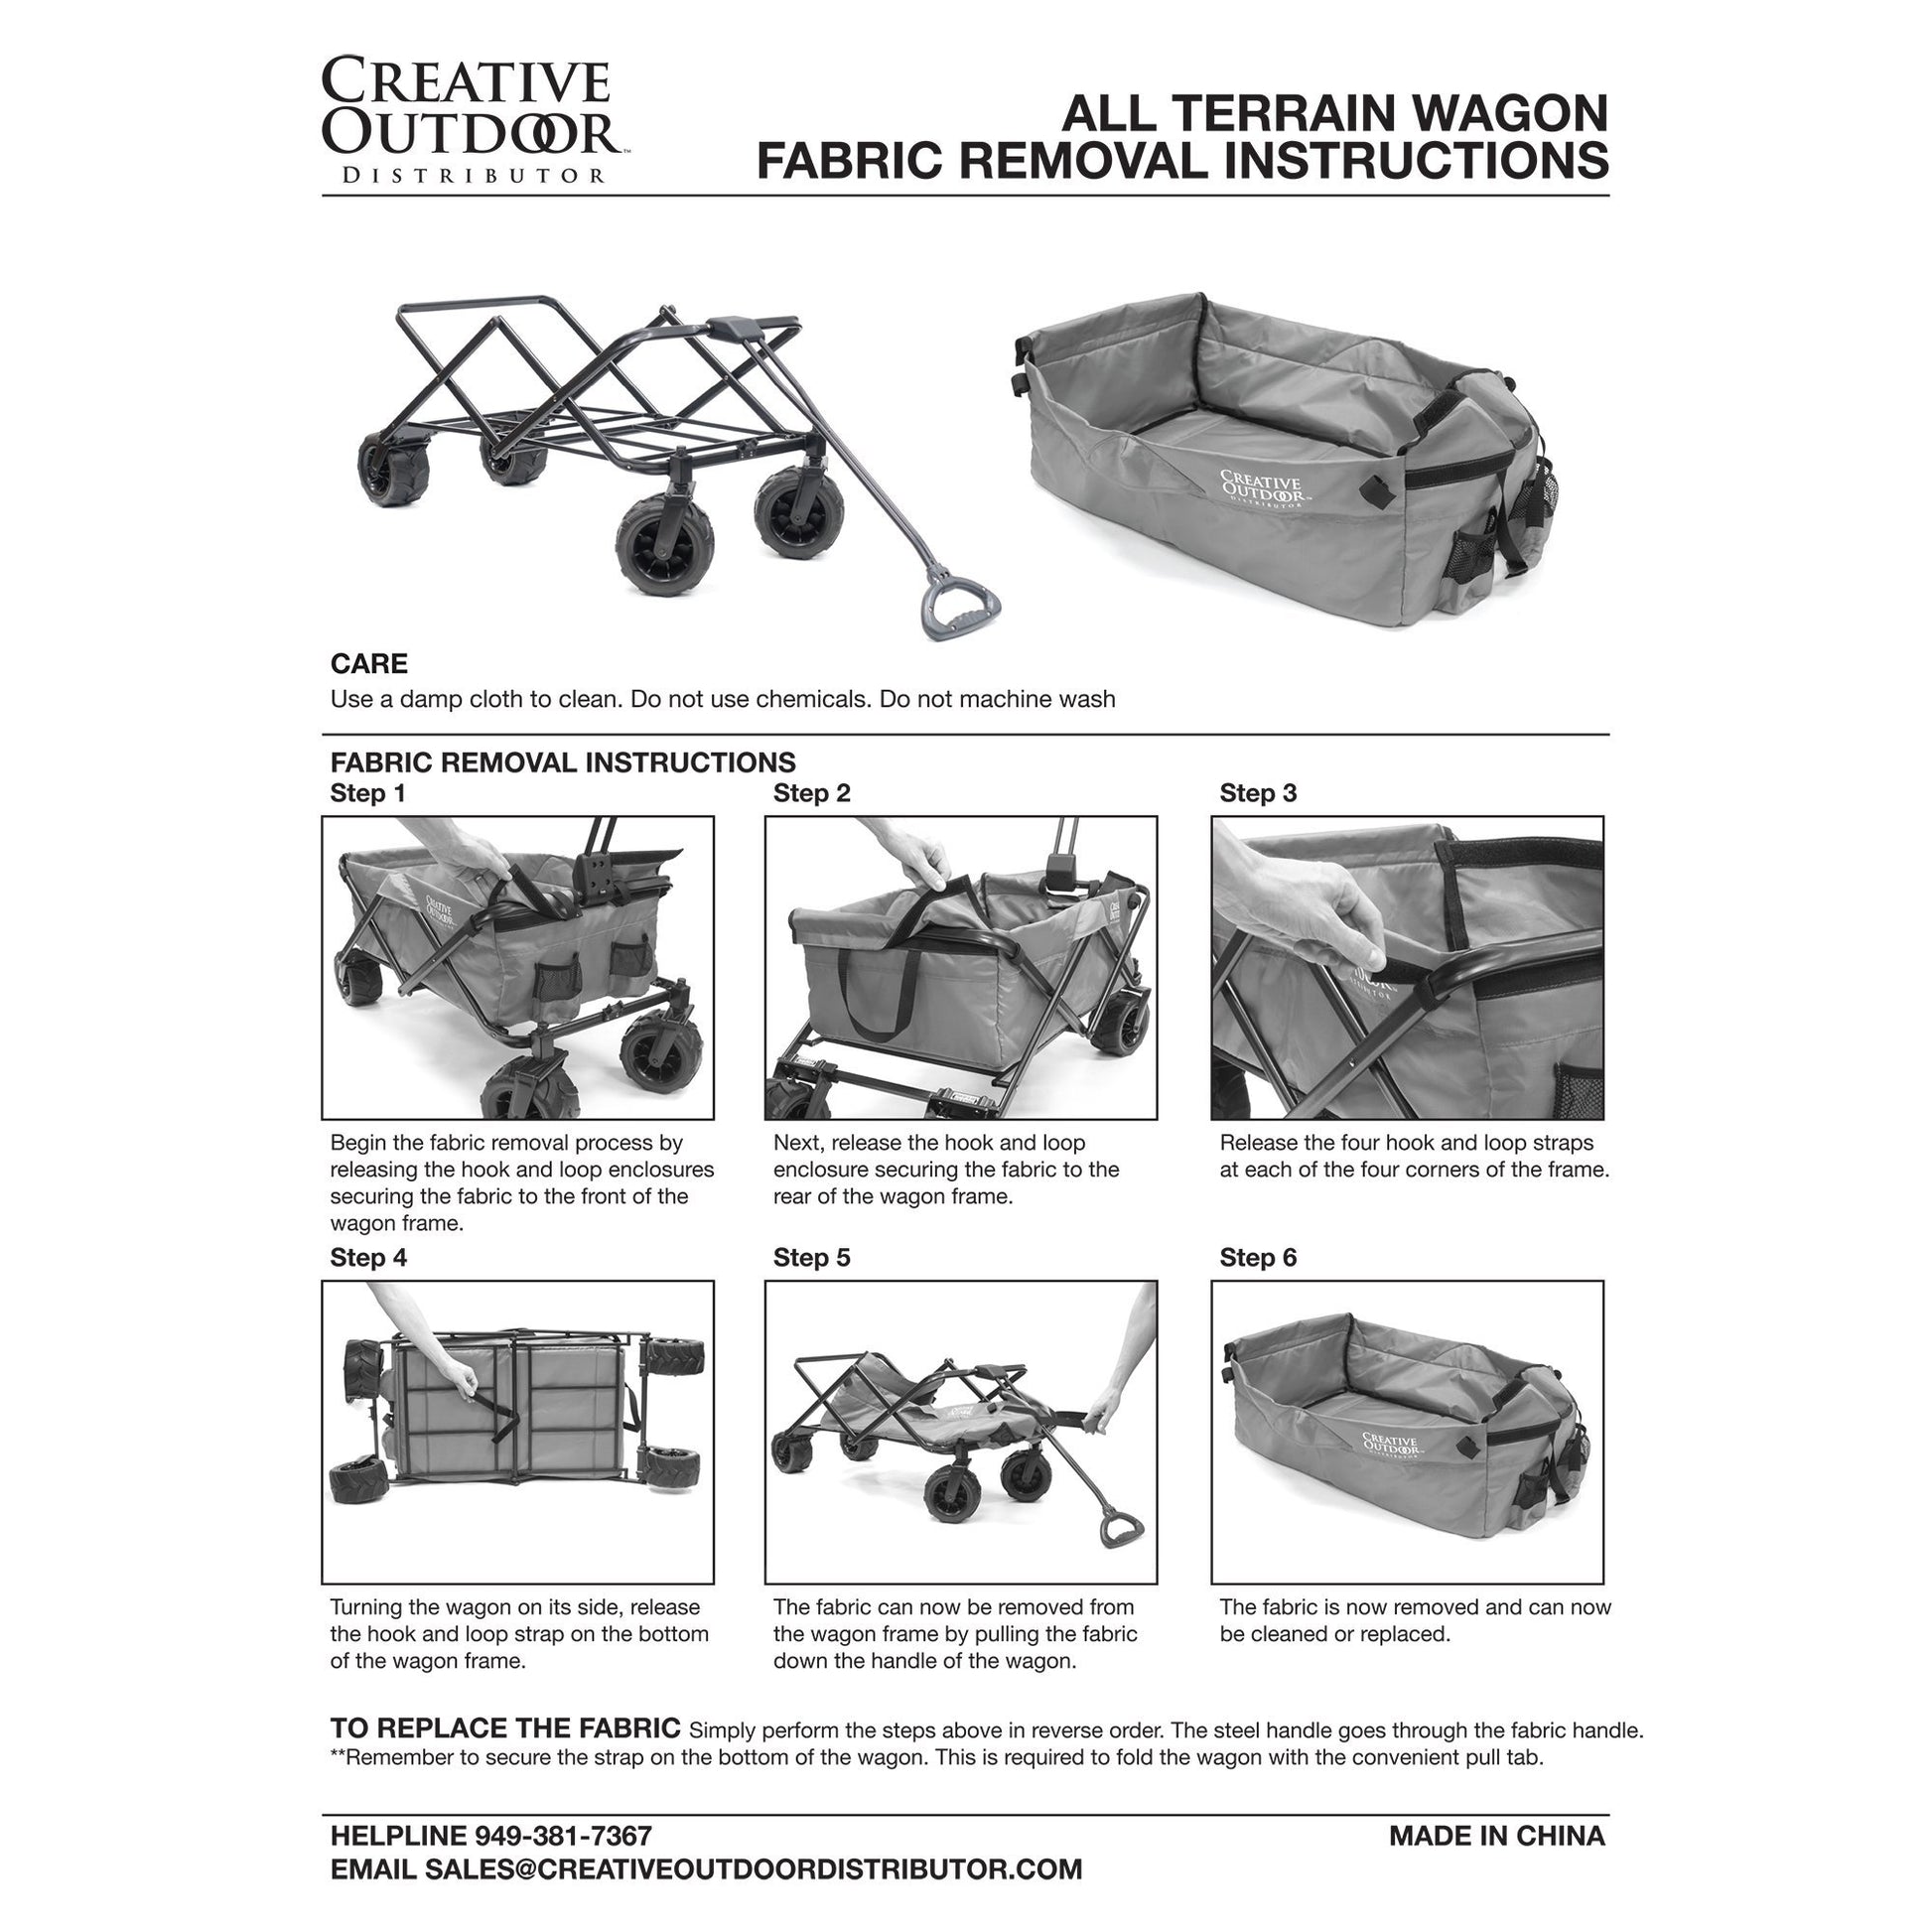 all-terrain-folding-wagon-camo